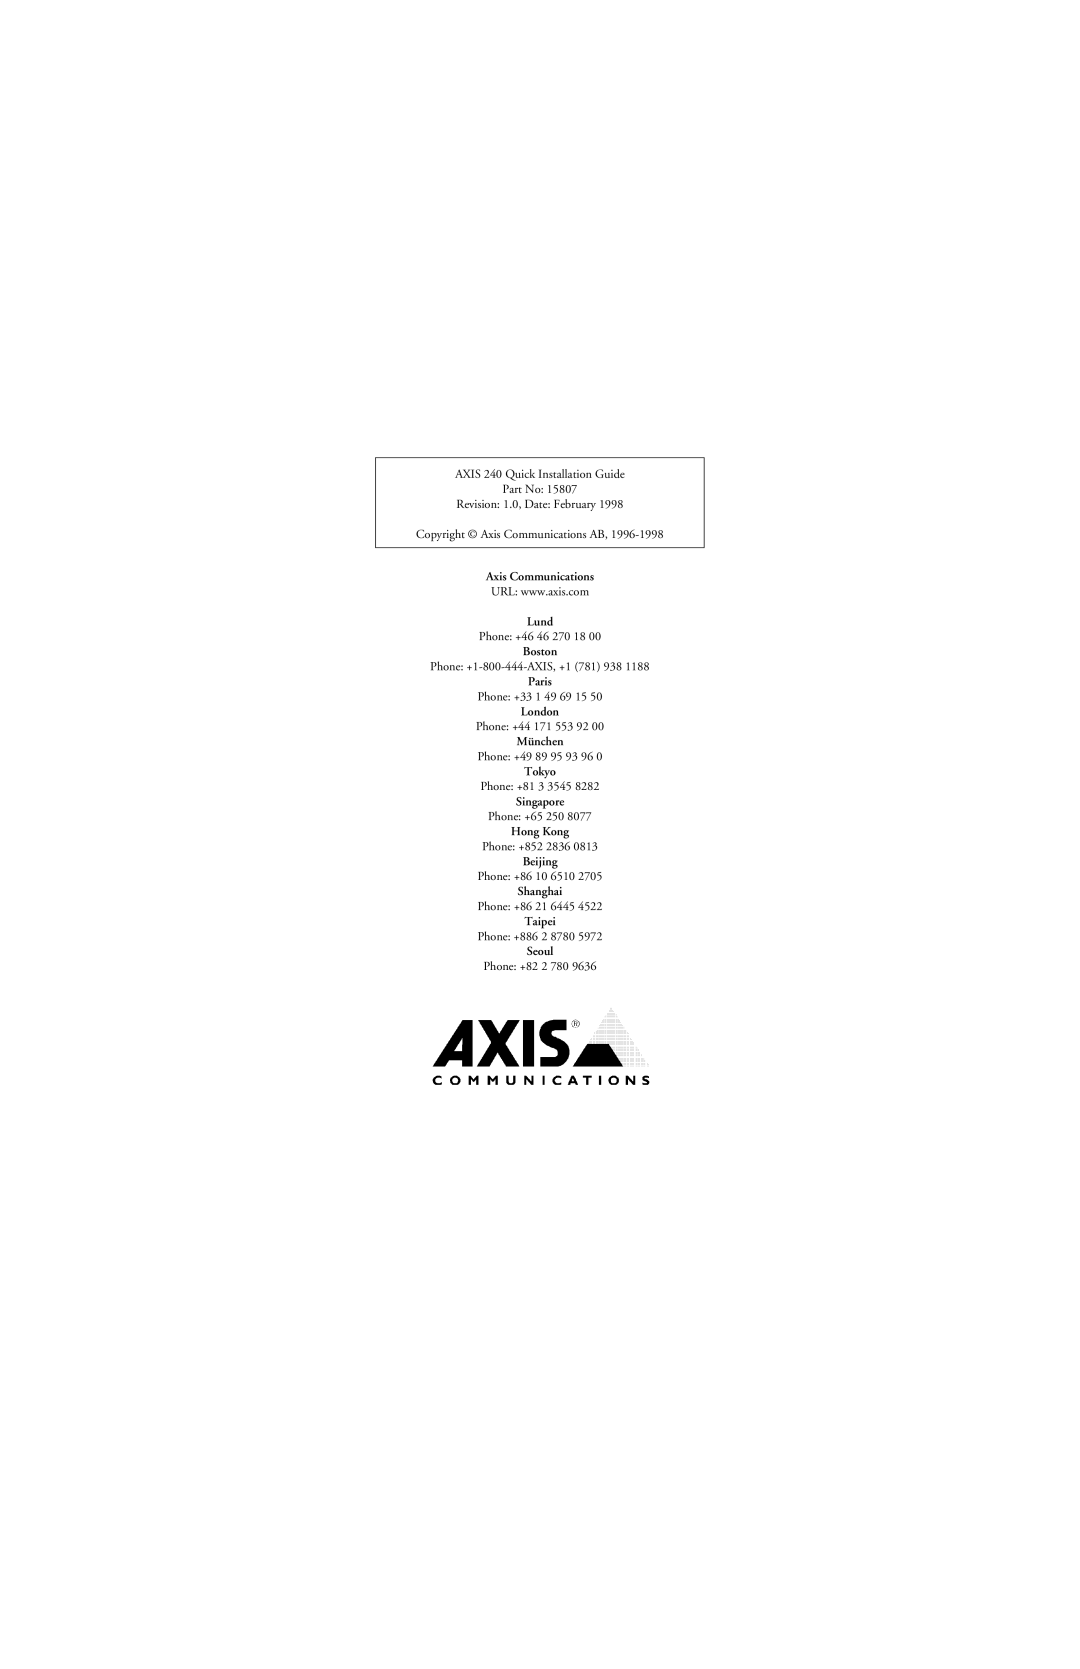 Axis Communications 240 Axis Communications, Lund, Boston, Paris, London, München, Tokyo, Singapore, Hong Kong, Beijing 